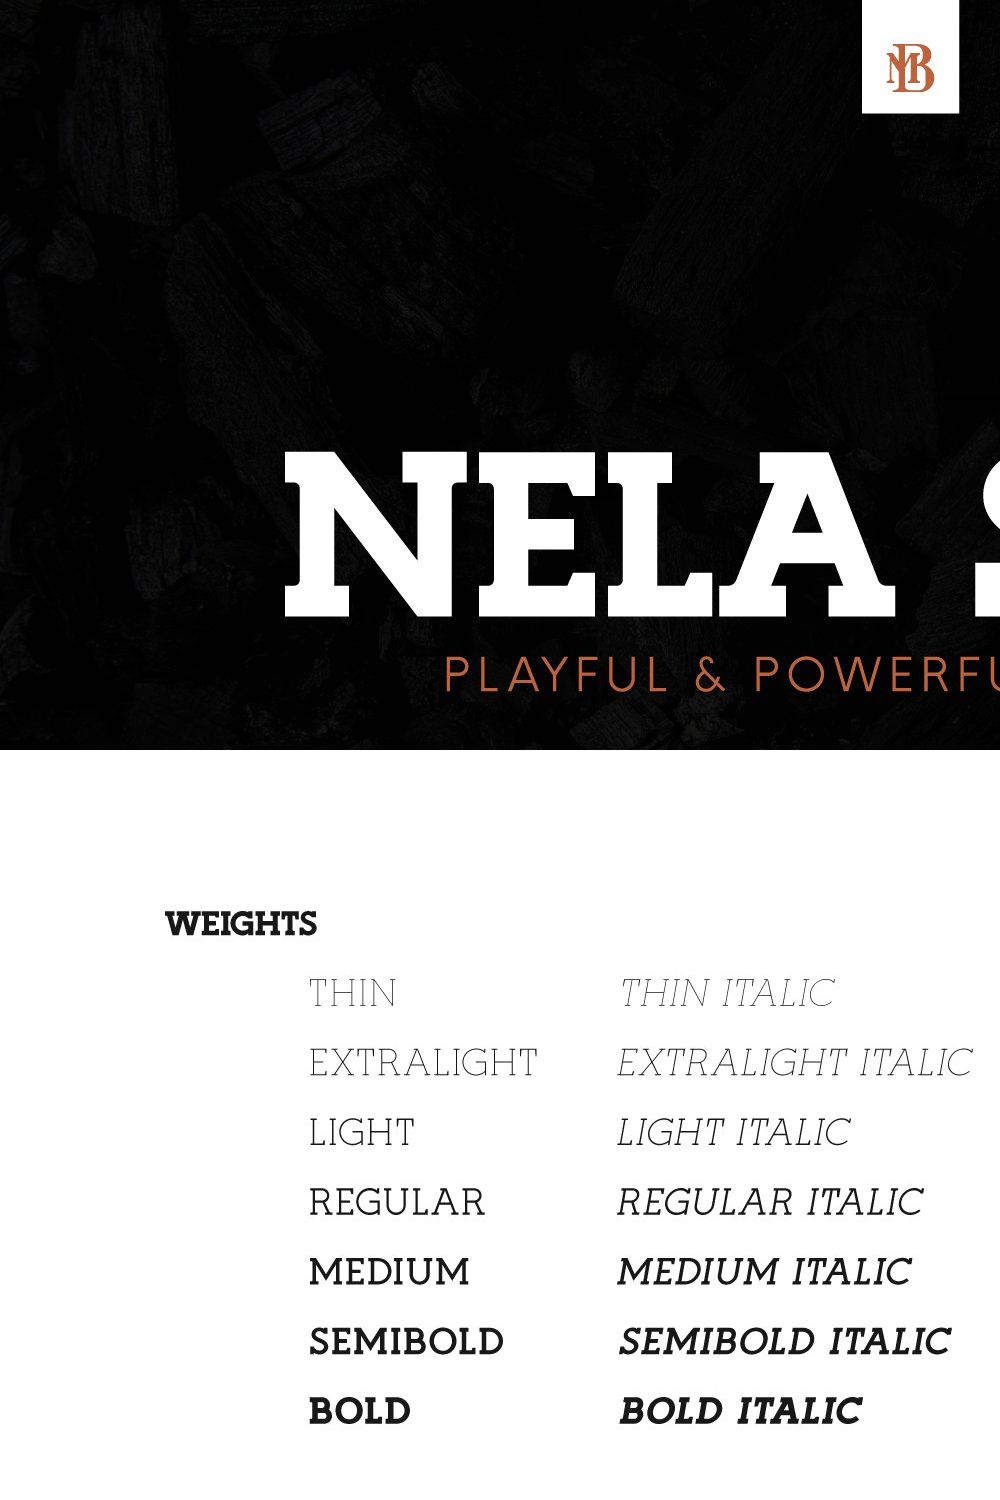 Nela Slab - Playful & Powerful Slab pinterest preview image.